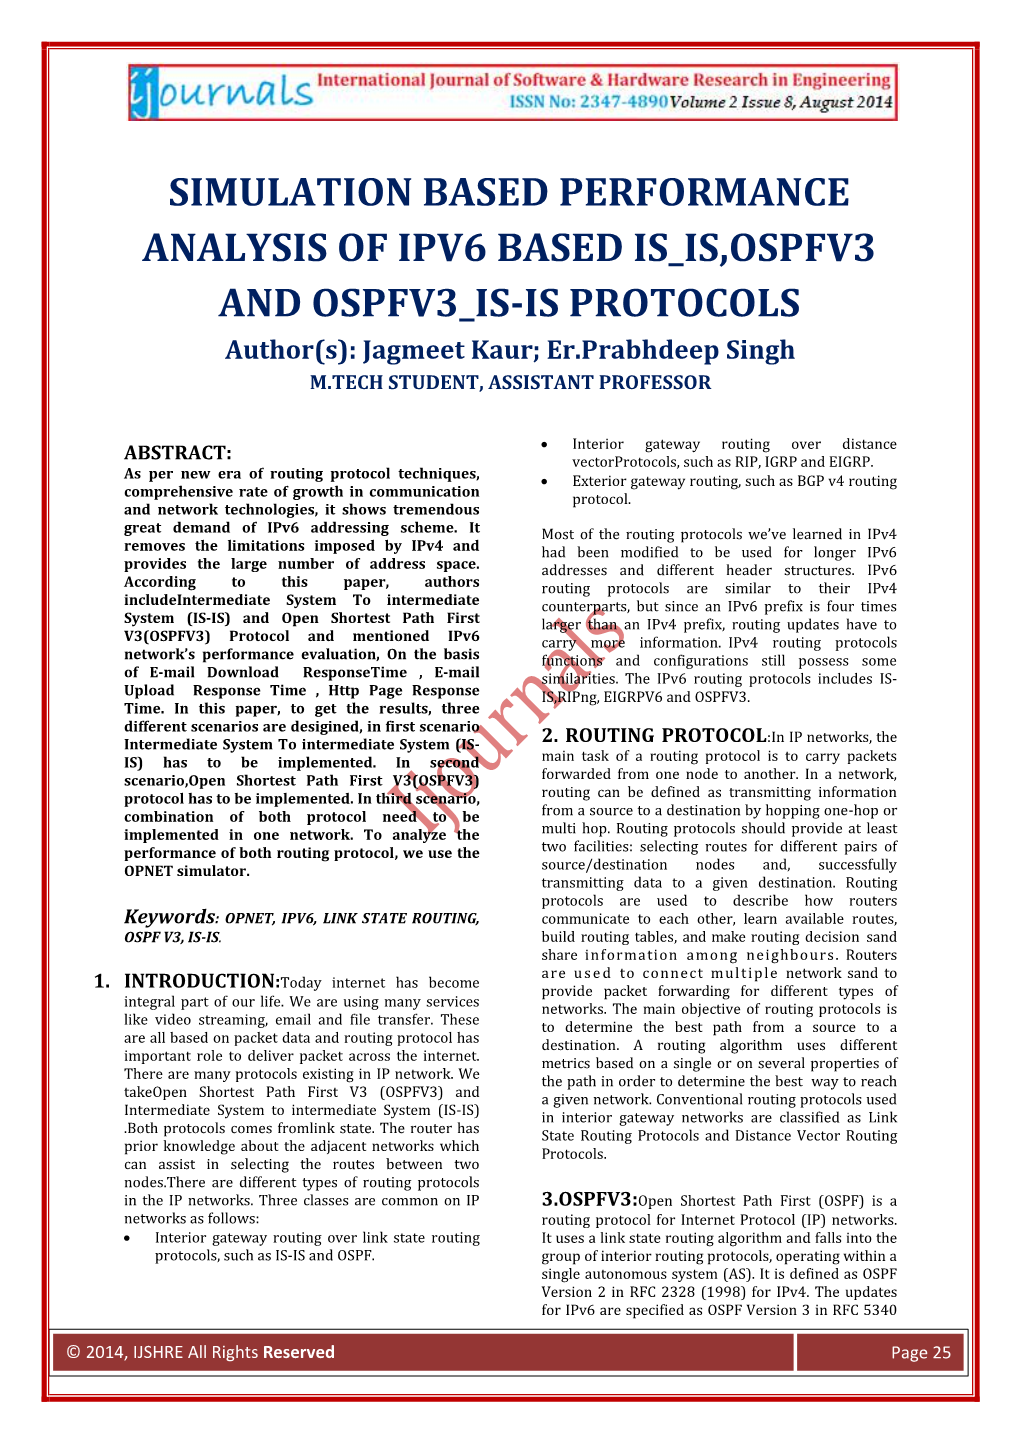 Simulation Based Performance Analysis of Ipv6 Based Is Is,Ospfv3